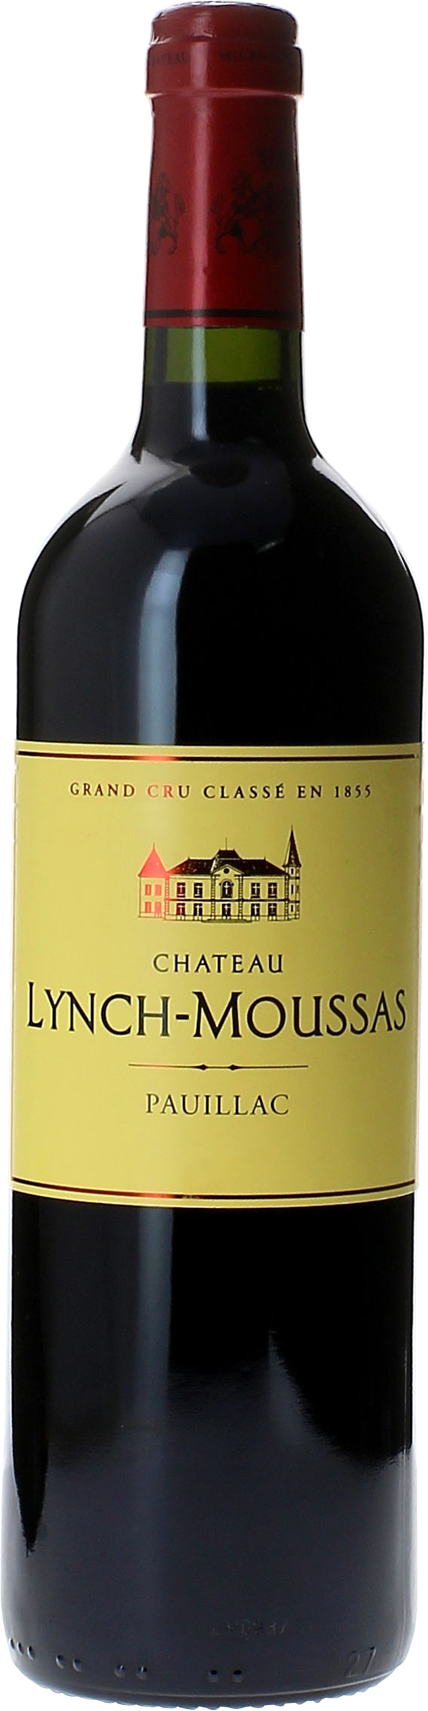 Lynch Moussas 1989